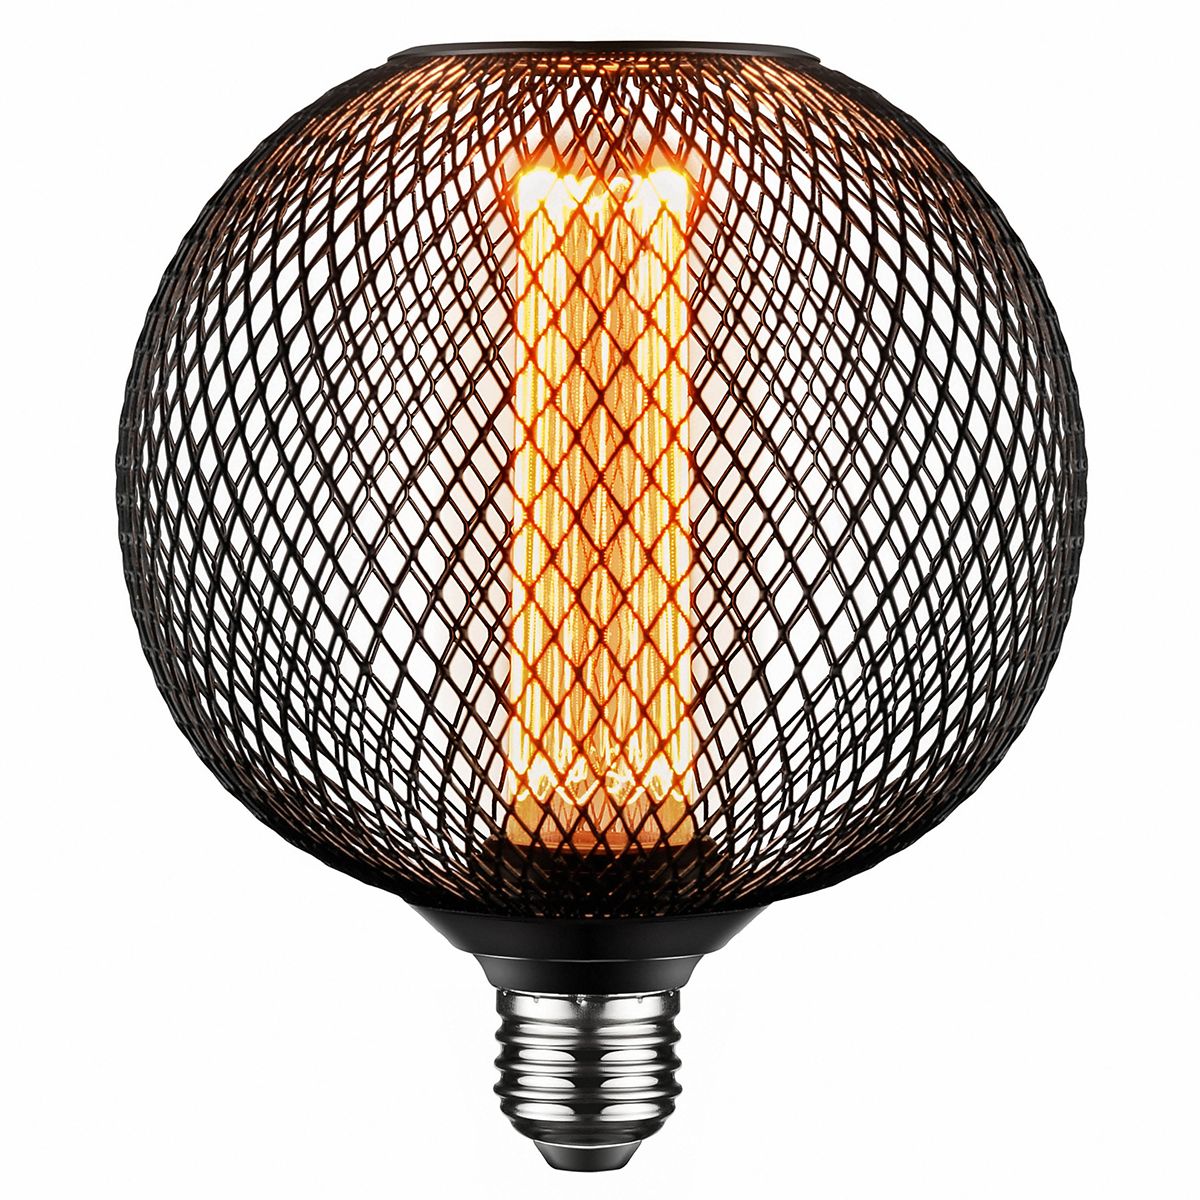 Dimmable Led Light Bulb